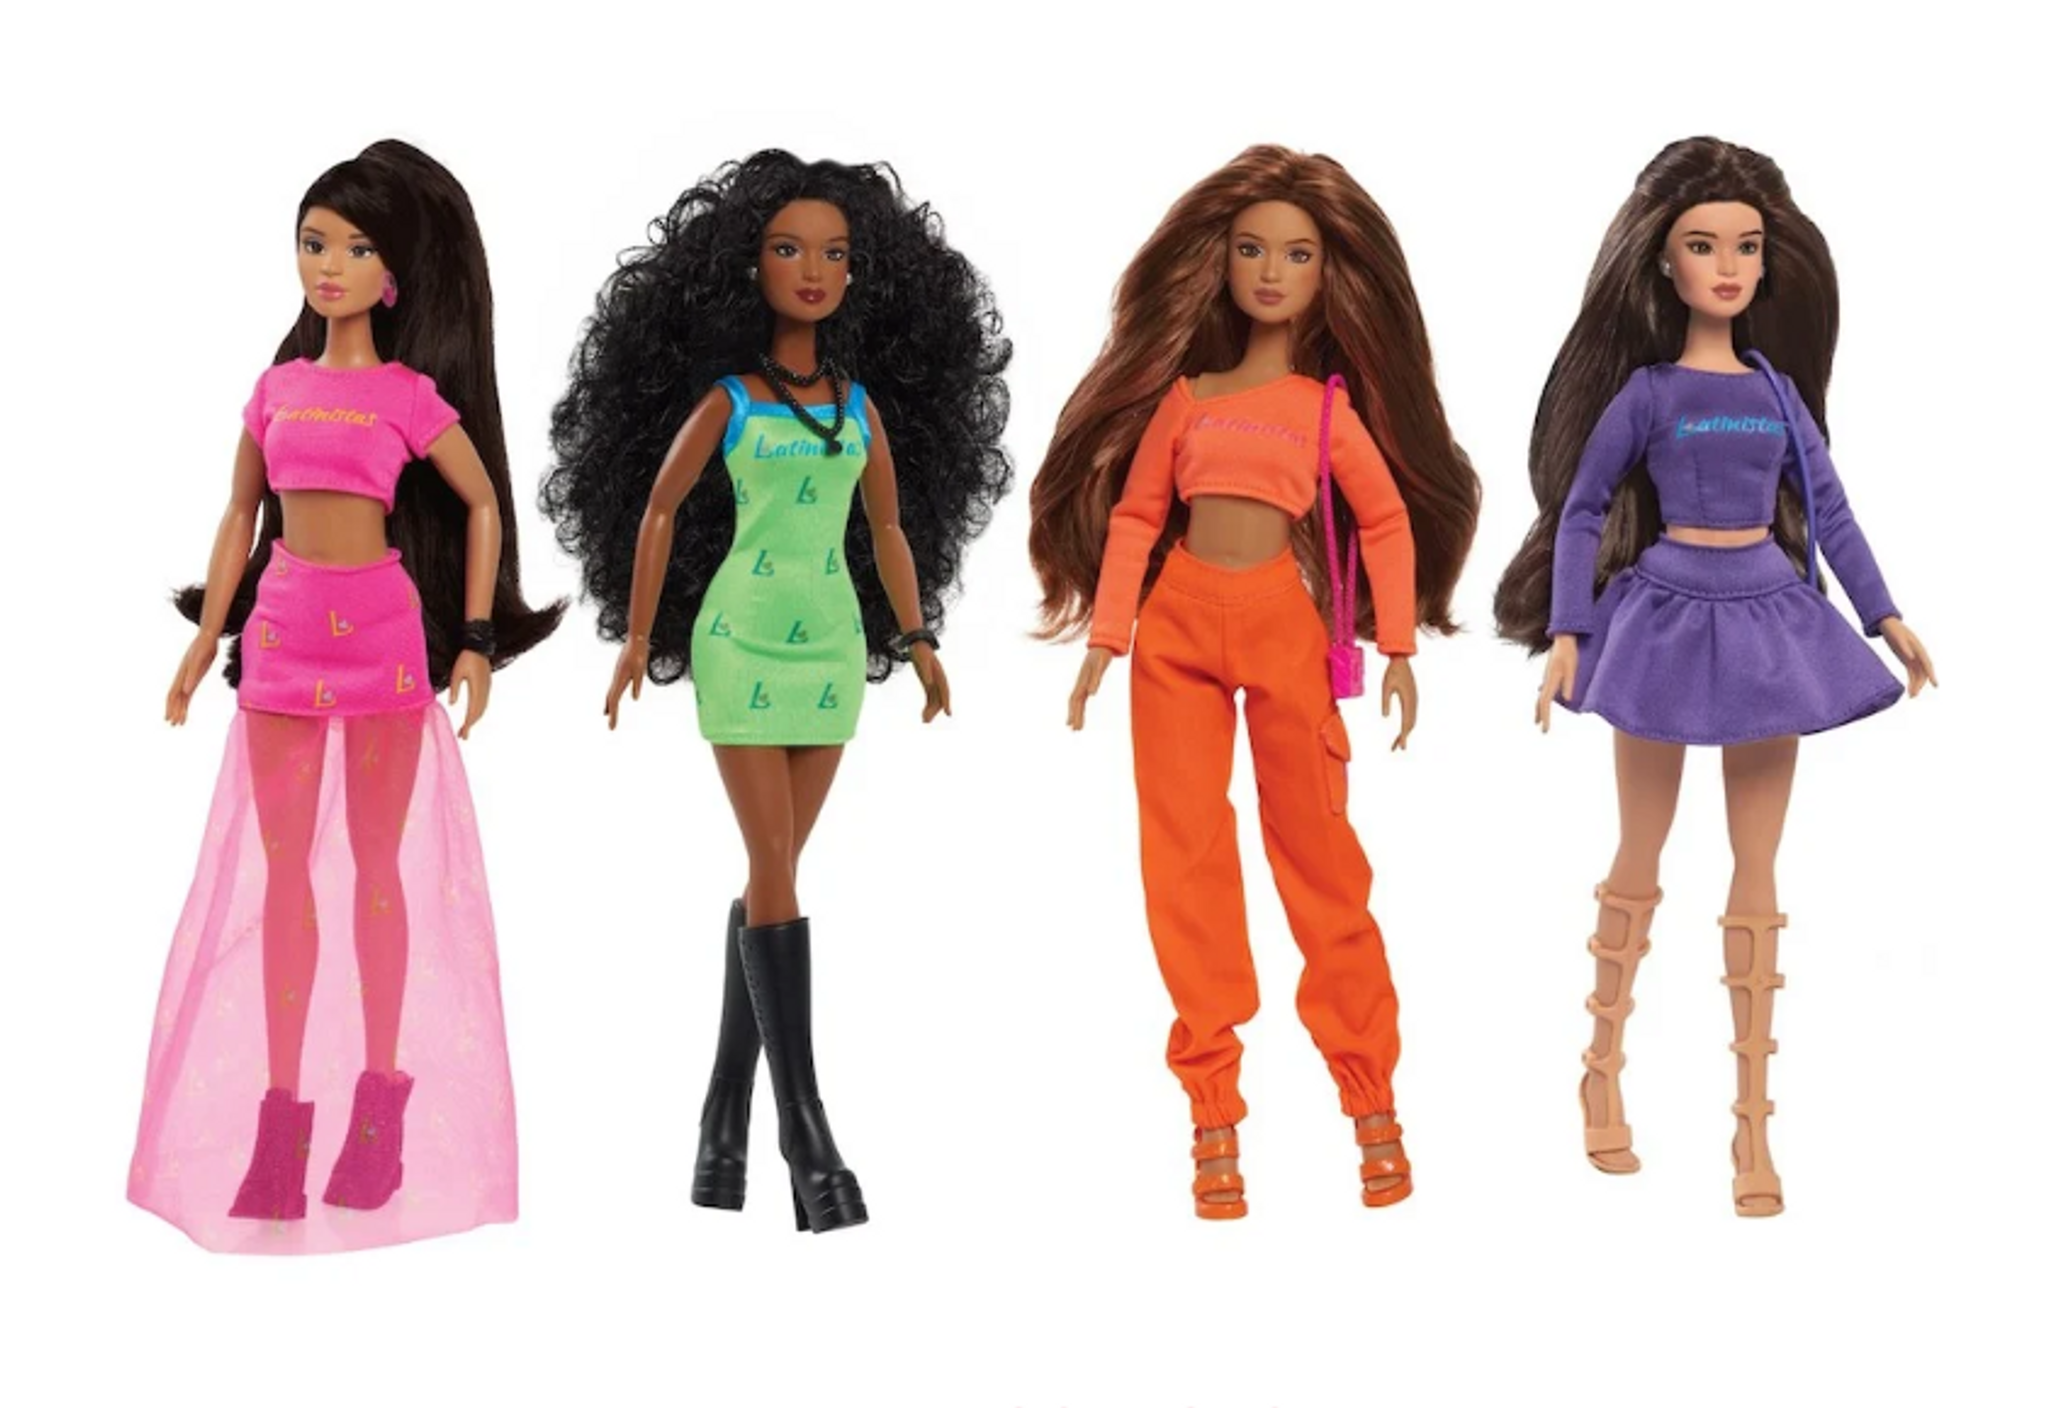 Purpose Toys celebrates Latina beauty with fashion dolls